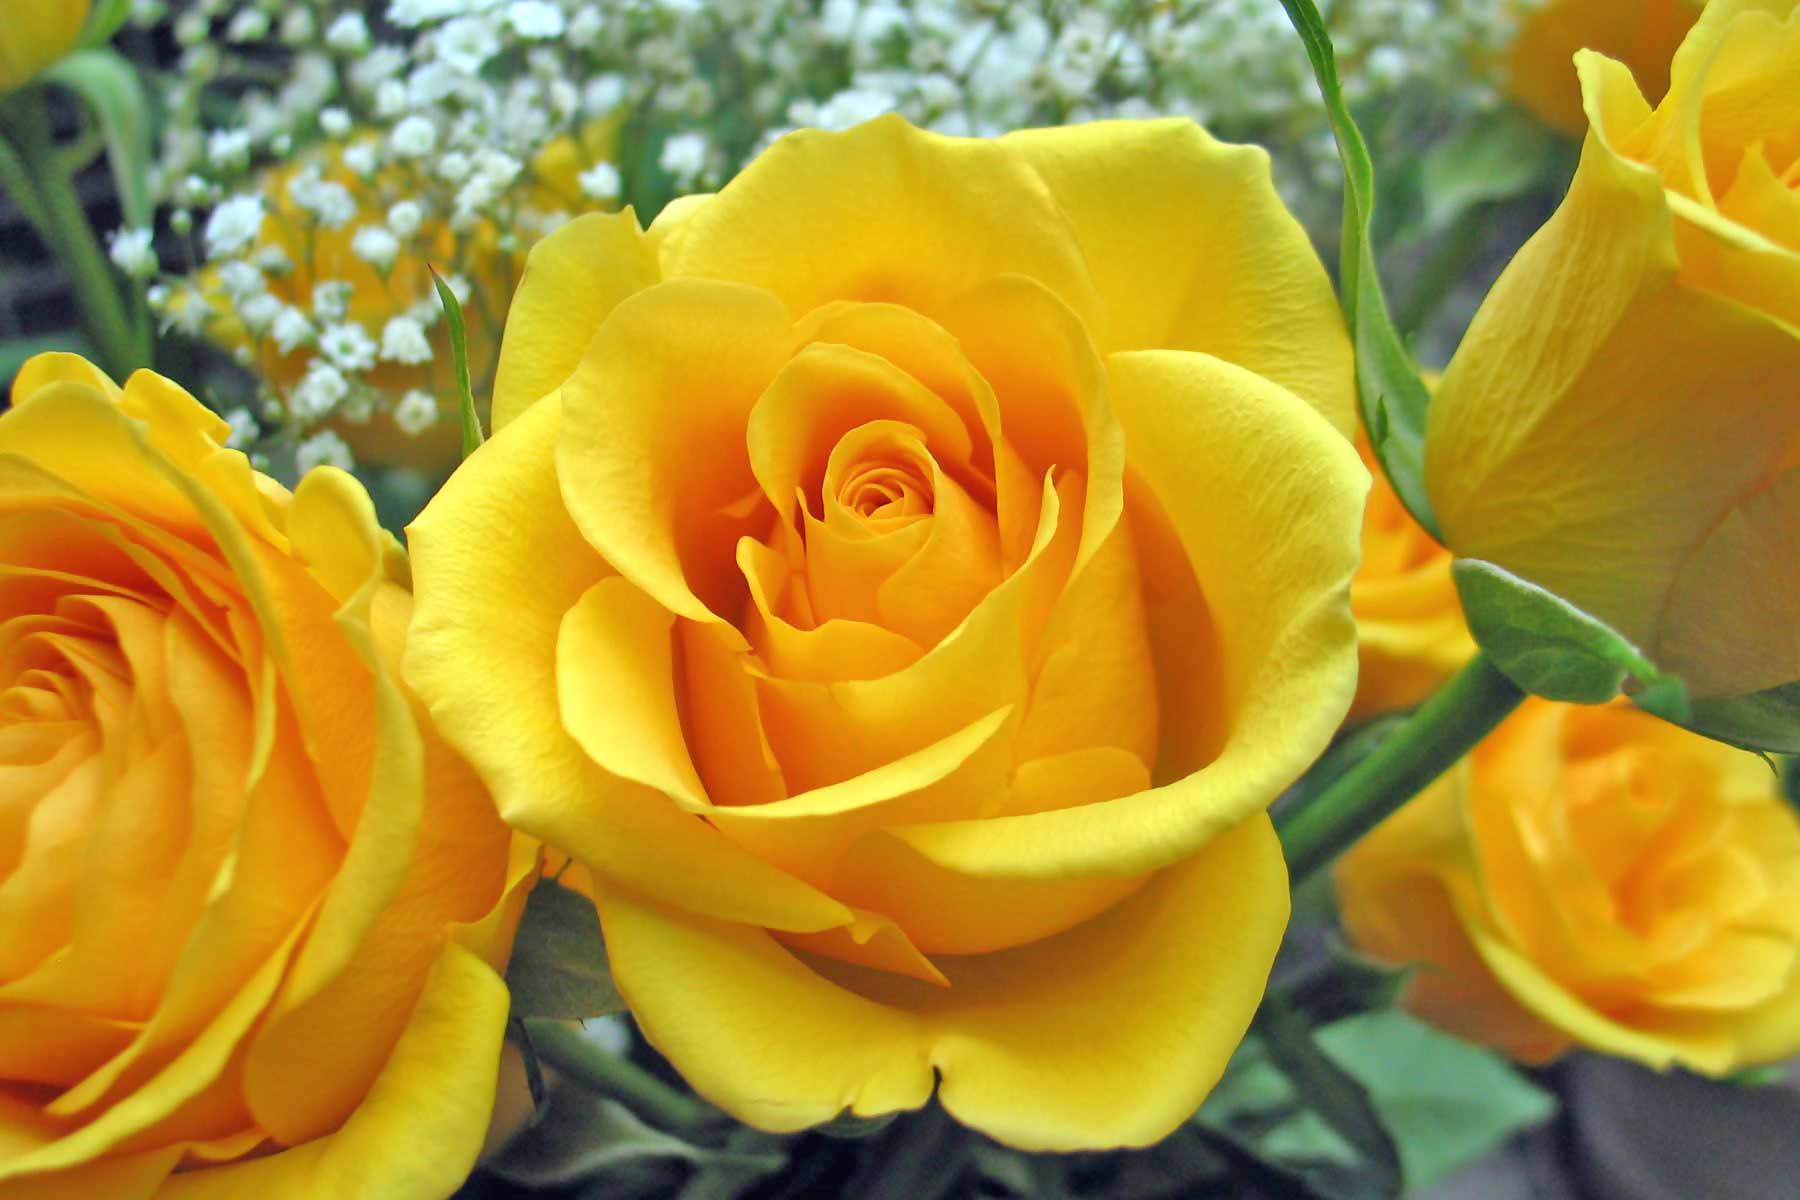 http://teguh77.files.wordpress.com/2010/02/single-yellow-rose.jpg